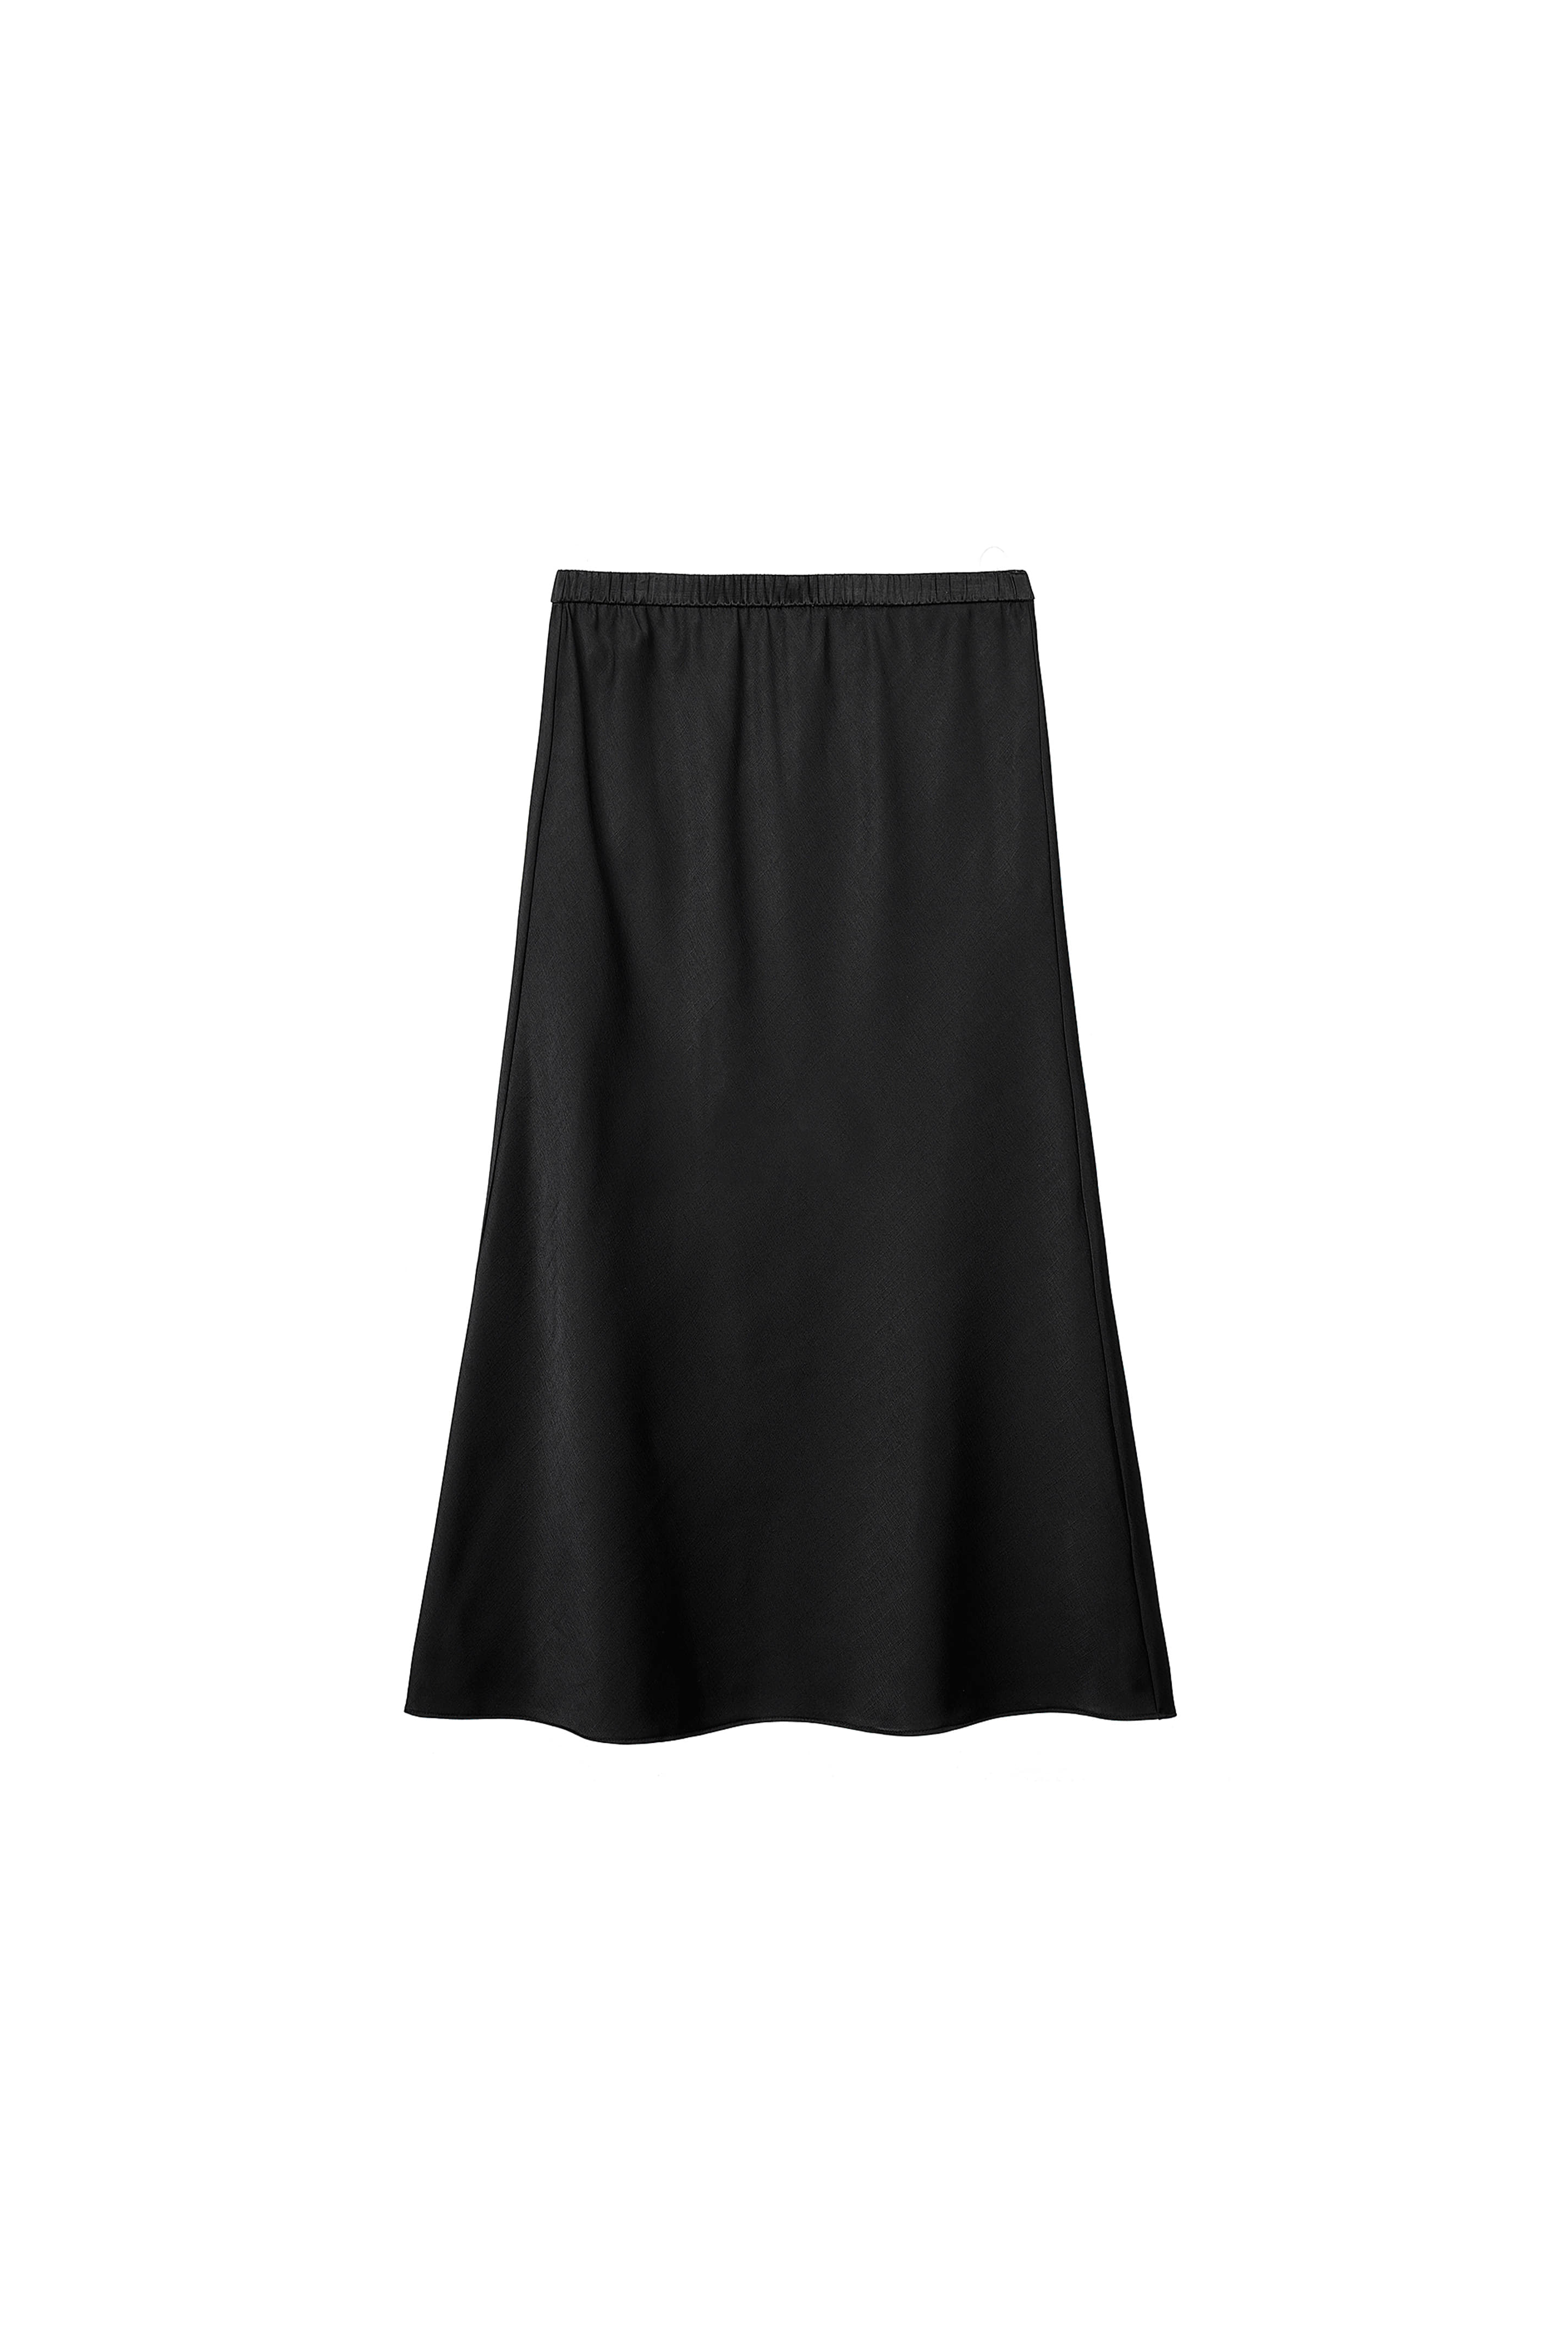 3rd) Besset Skirt Black [08.29(MON) 20:00 재입고 예정]